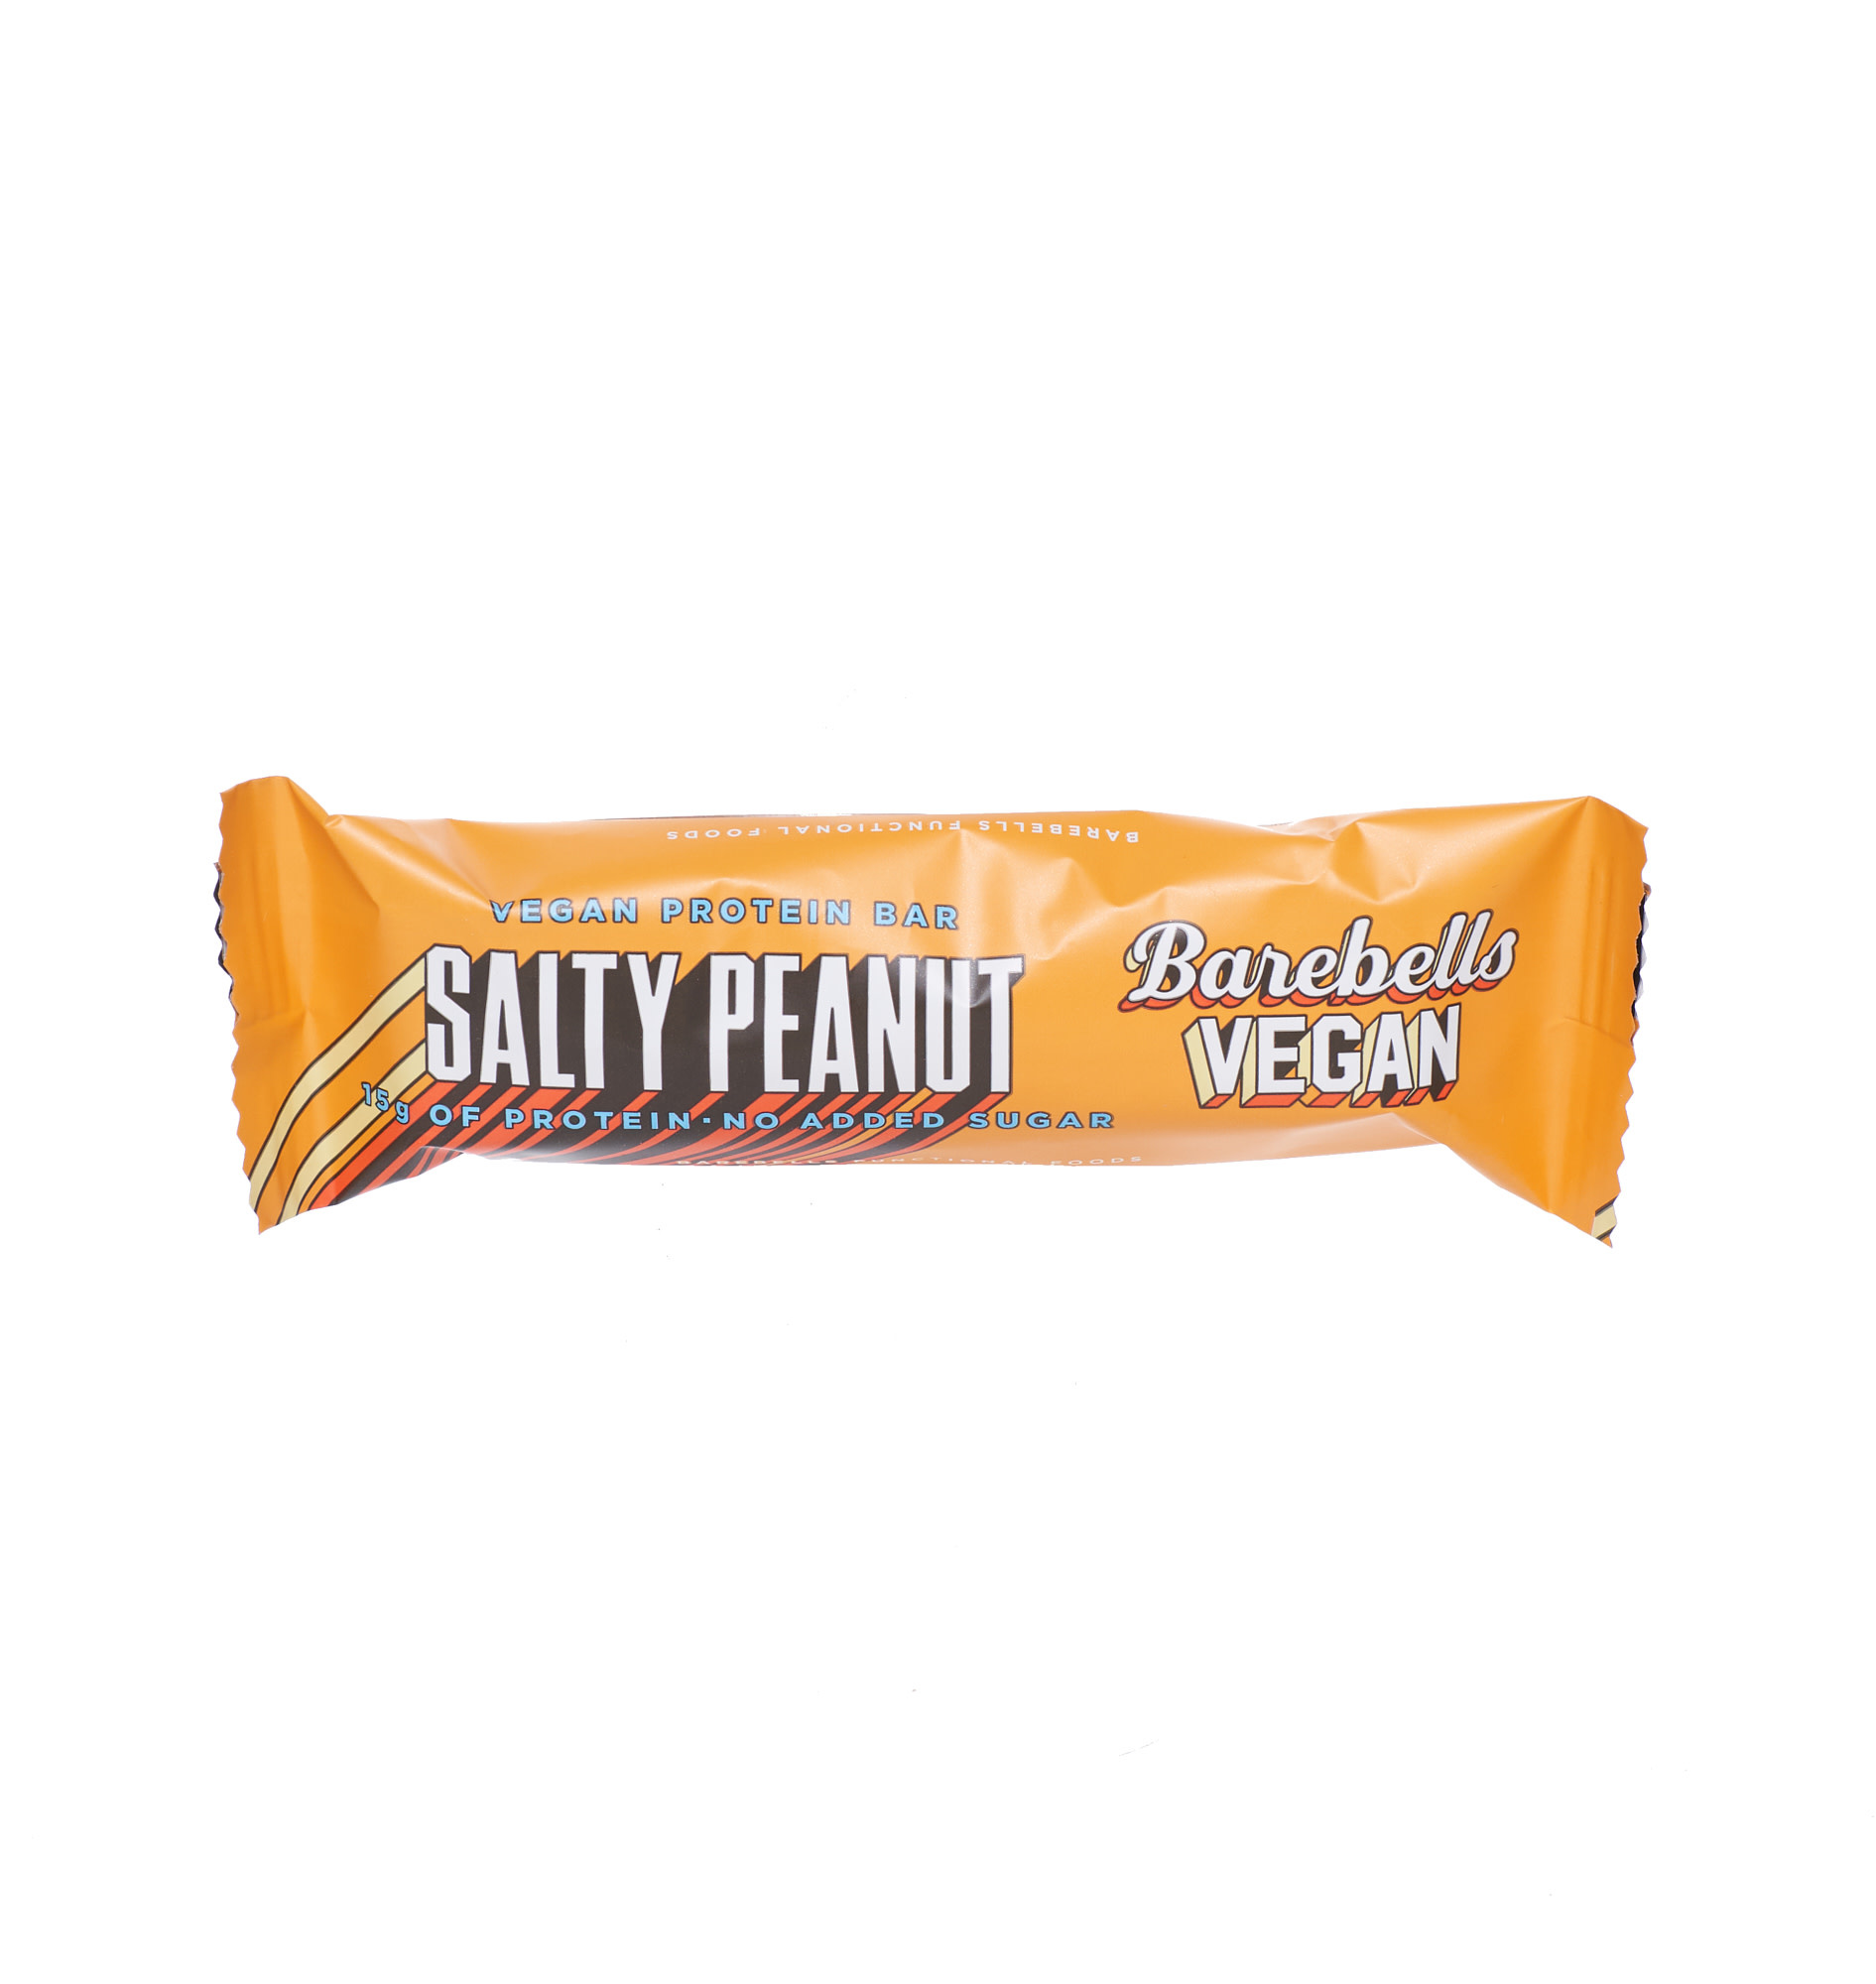 [V] Vegan Protein Bar - Salty Peanut